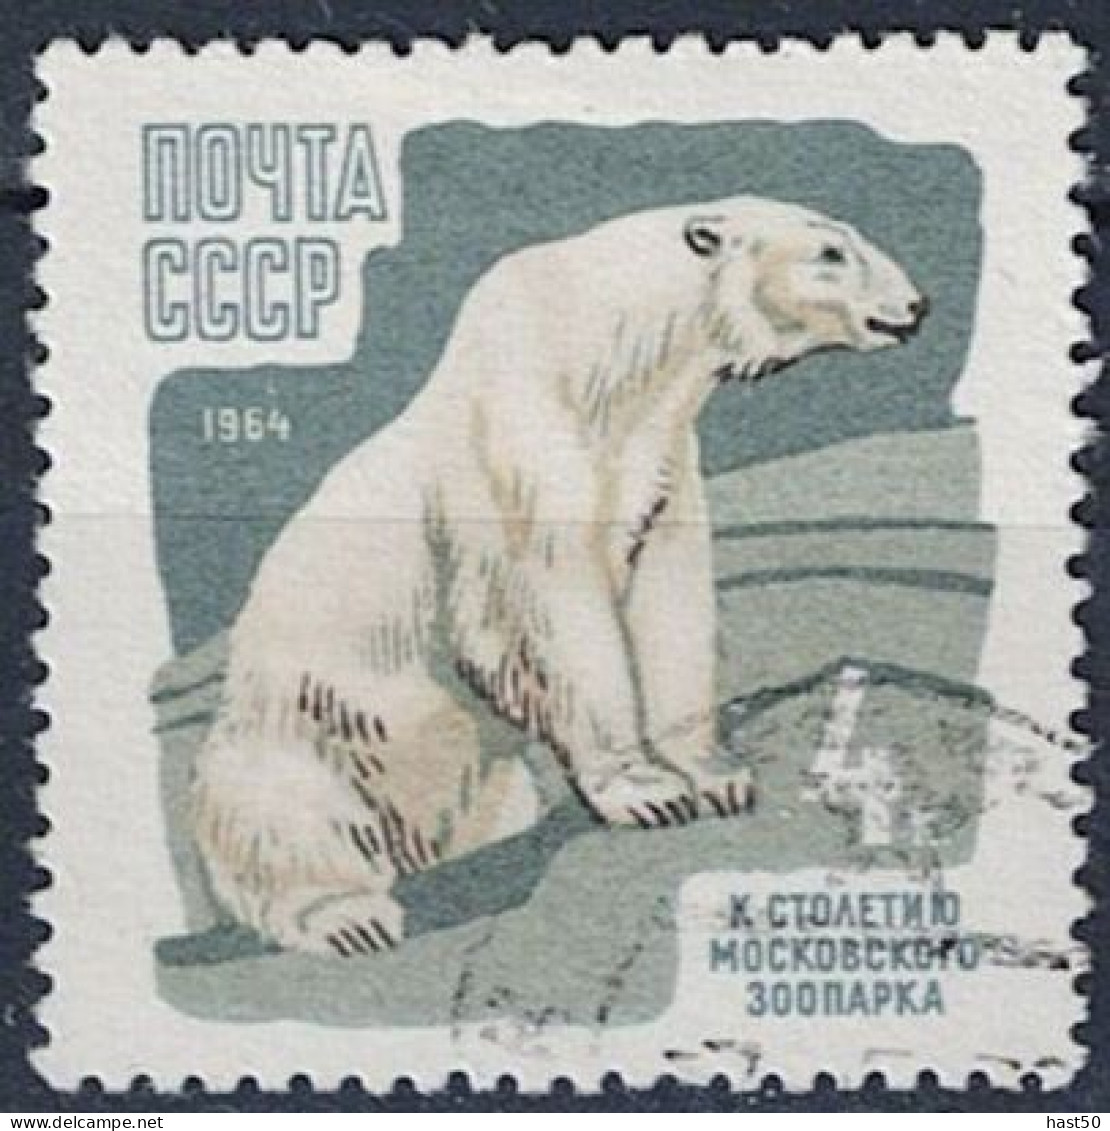 Sowjetunion UdSSR - Eisbär (Ursus Maritimus) (MiNr. 2916) 1964 - Gest Used Obl - Usados